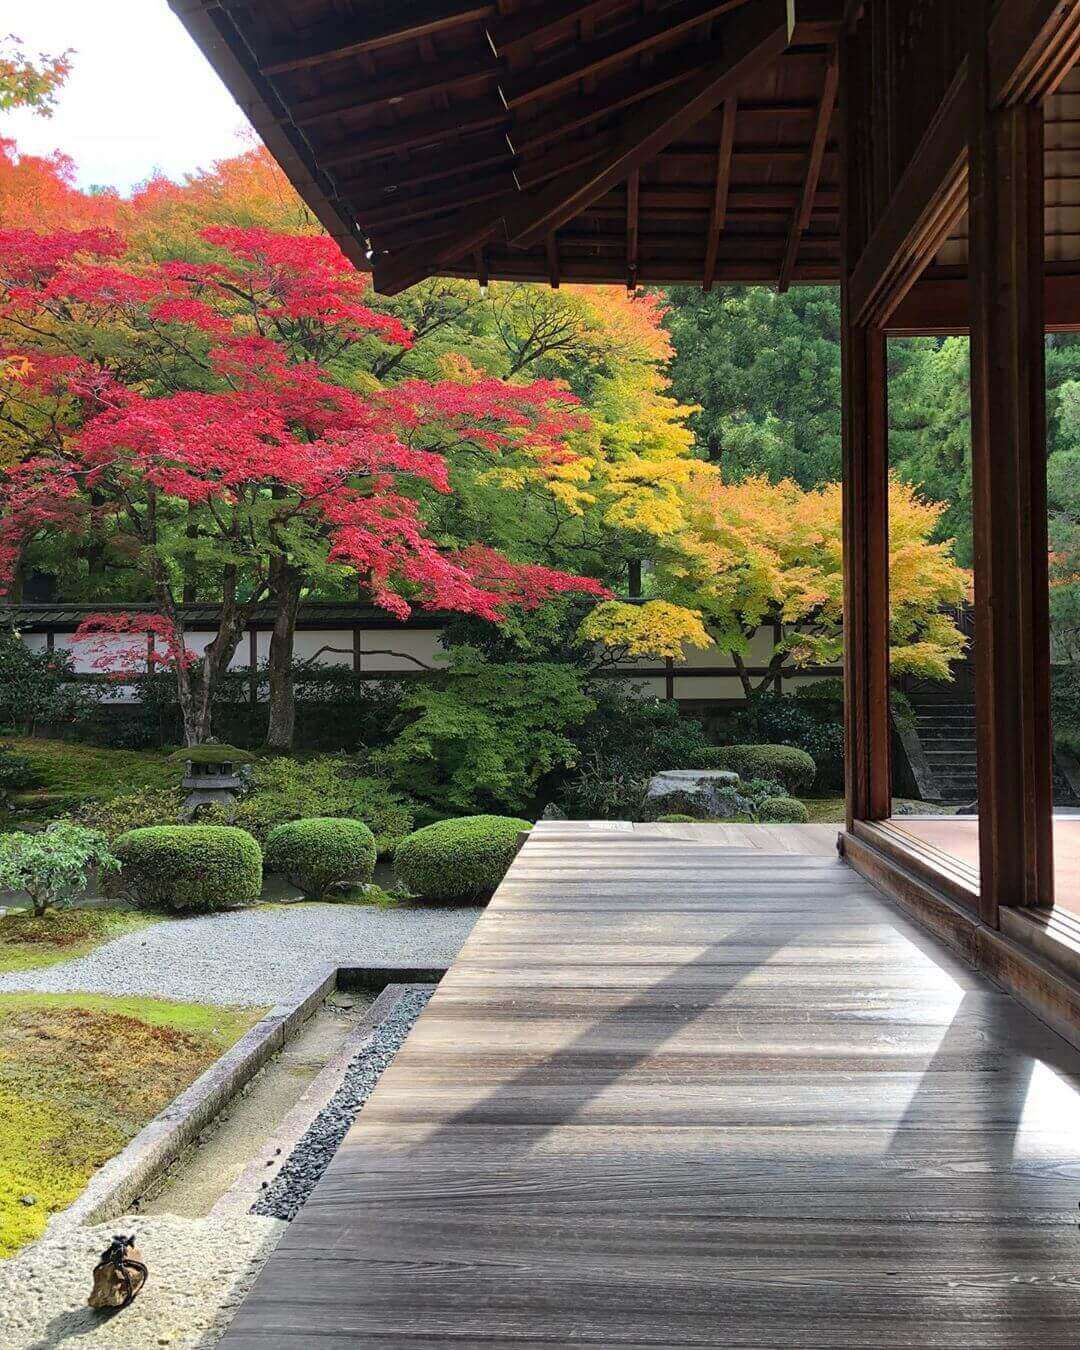 japanese autumn leaves - sennyu-ji temple